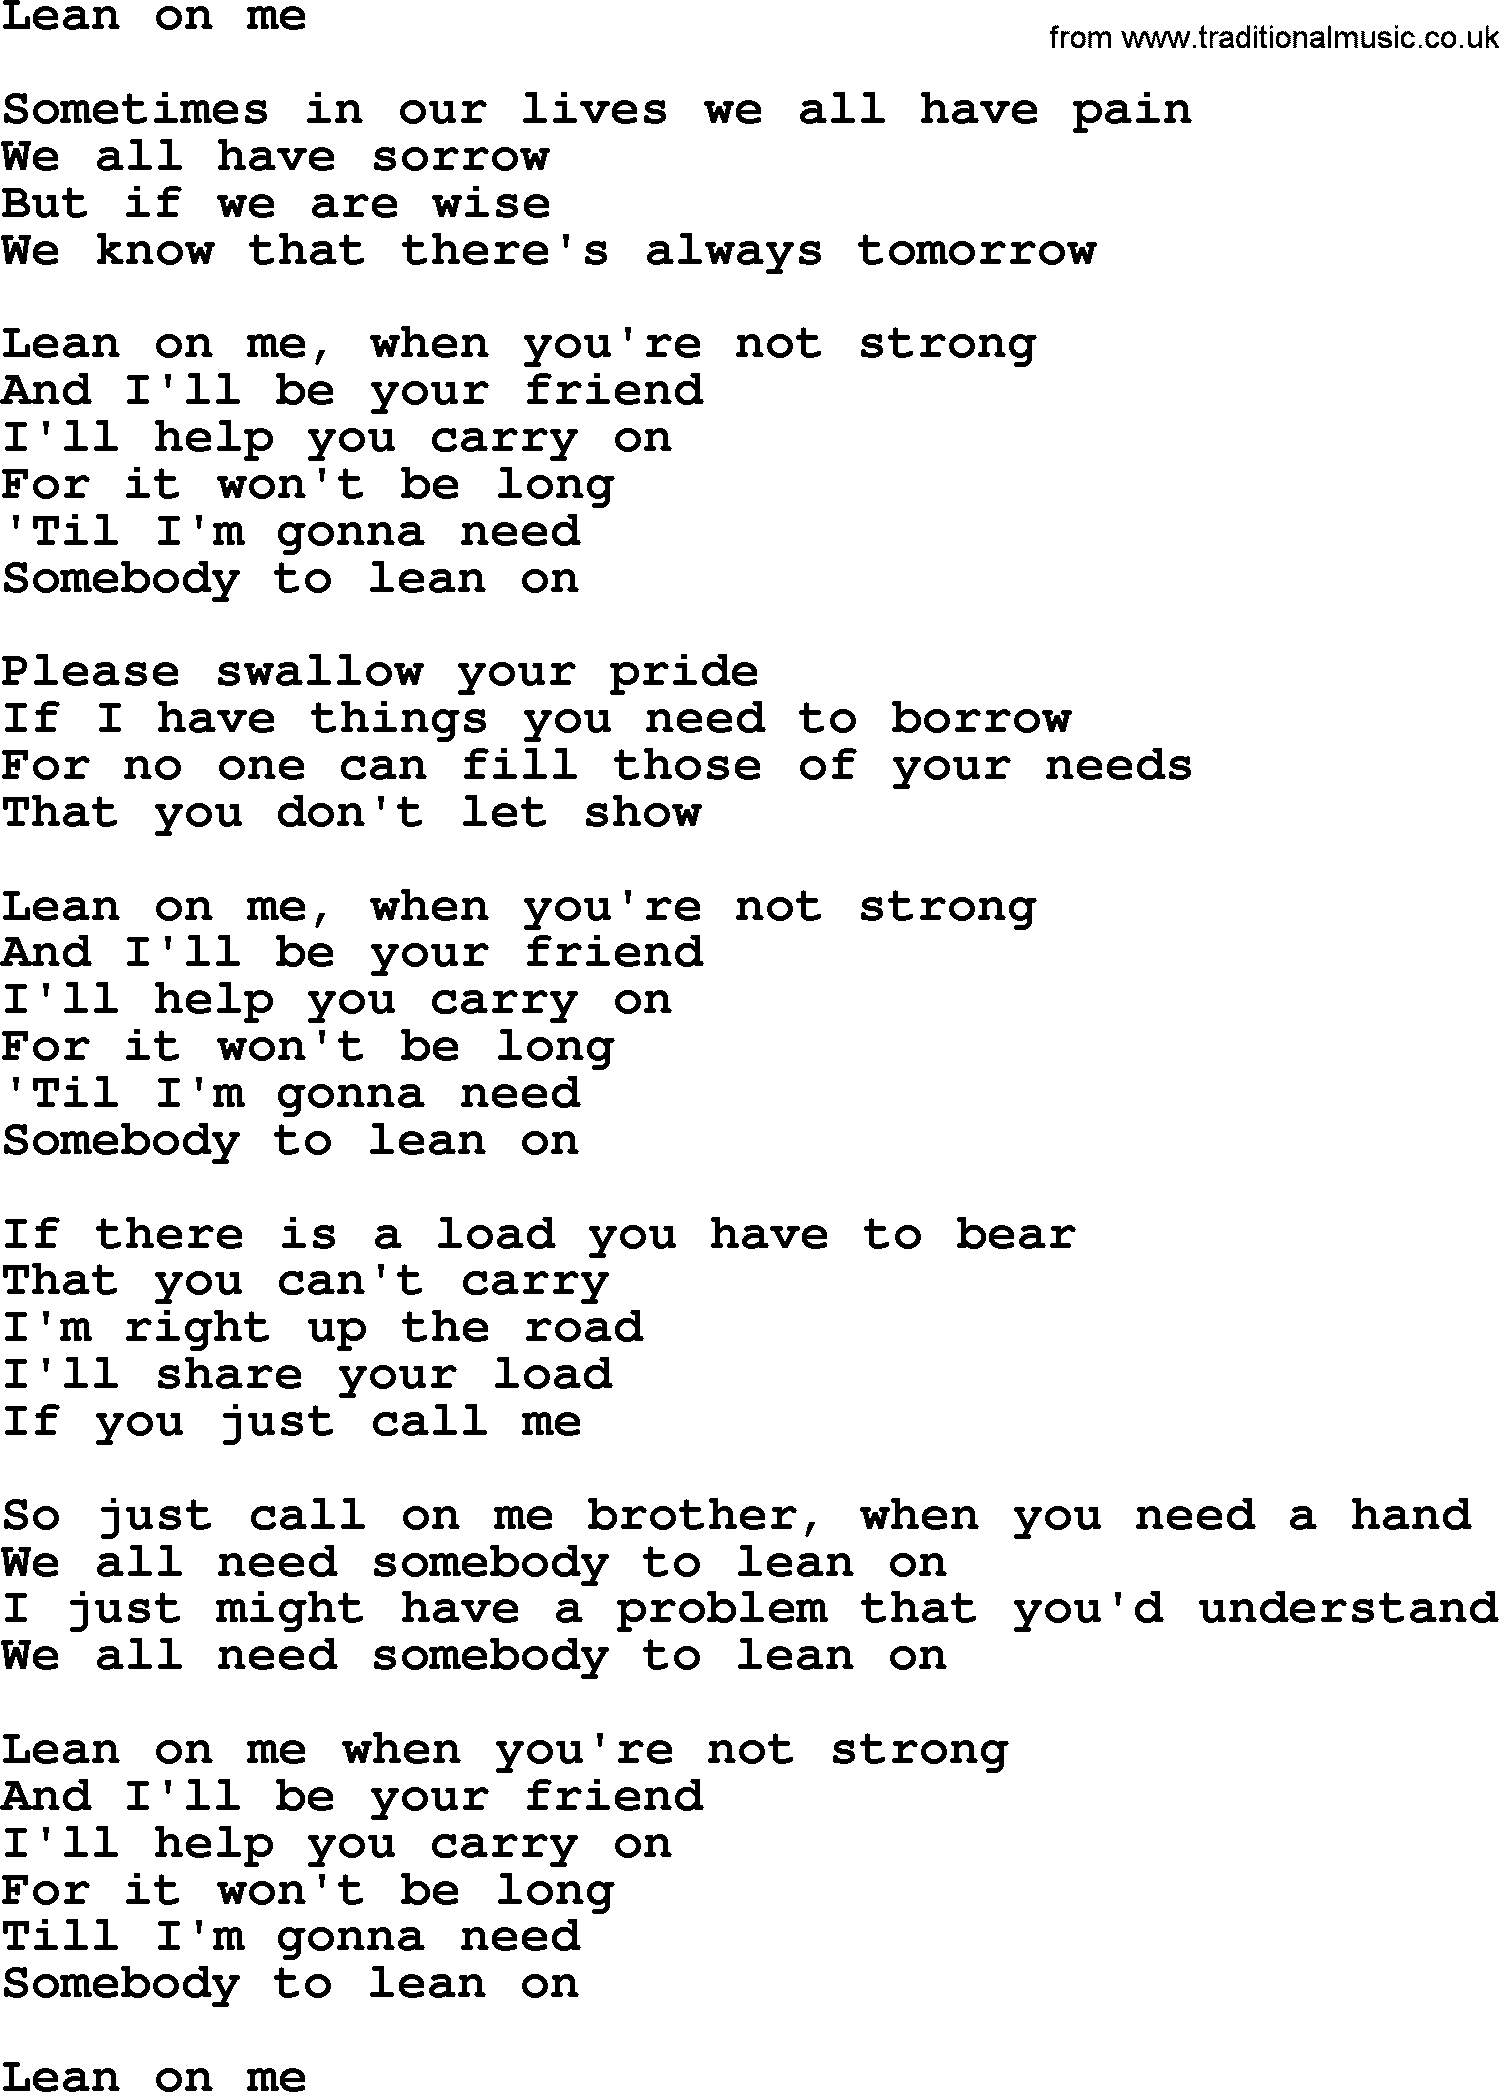 Bruce Springsteen song: Lean On Me lyrics